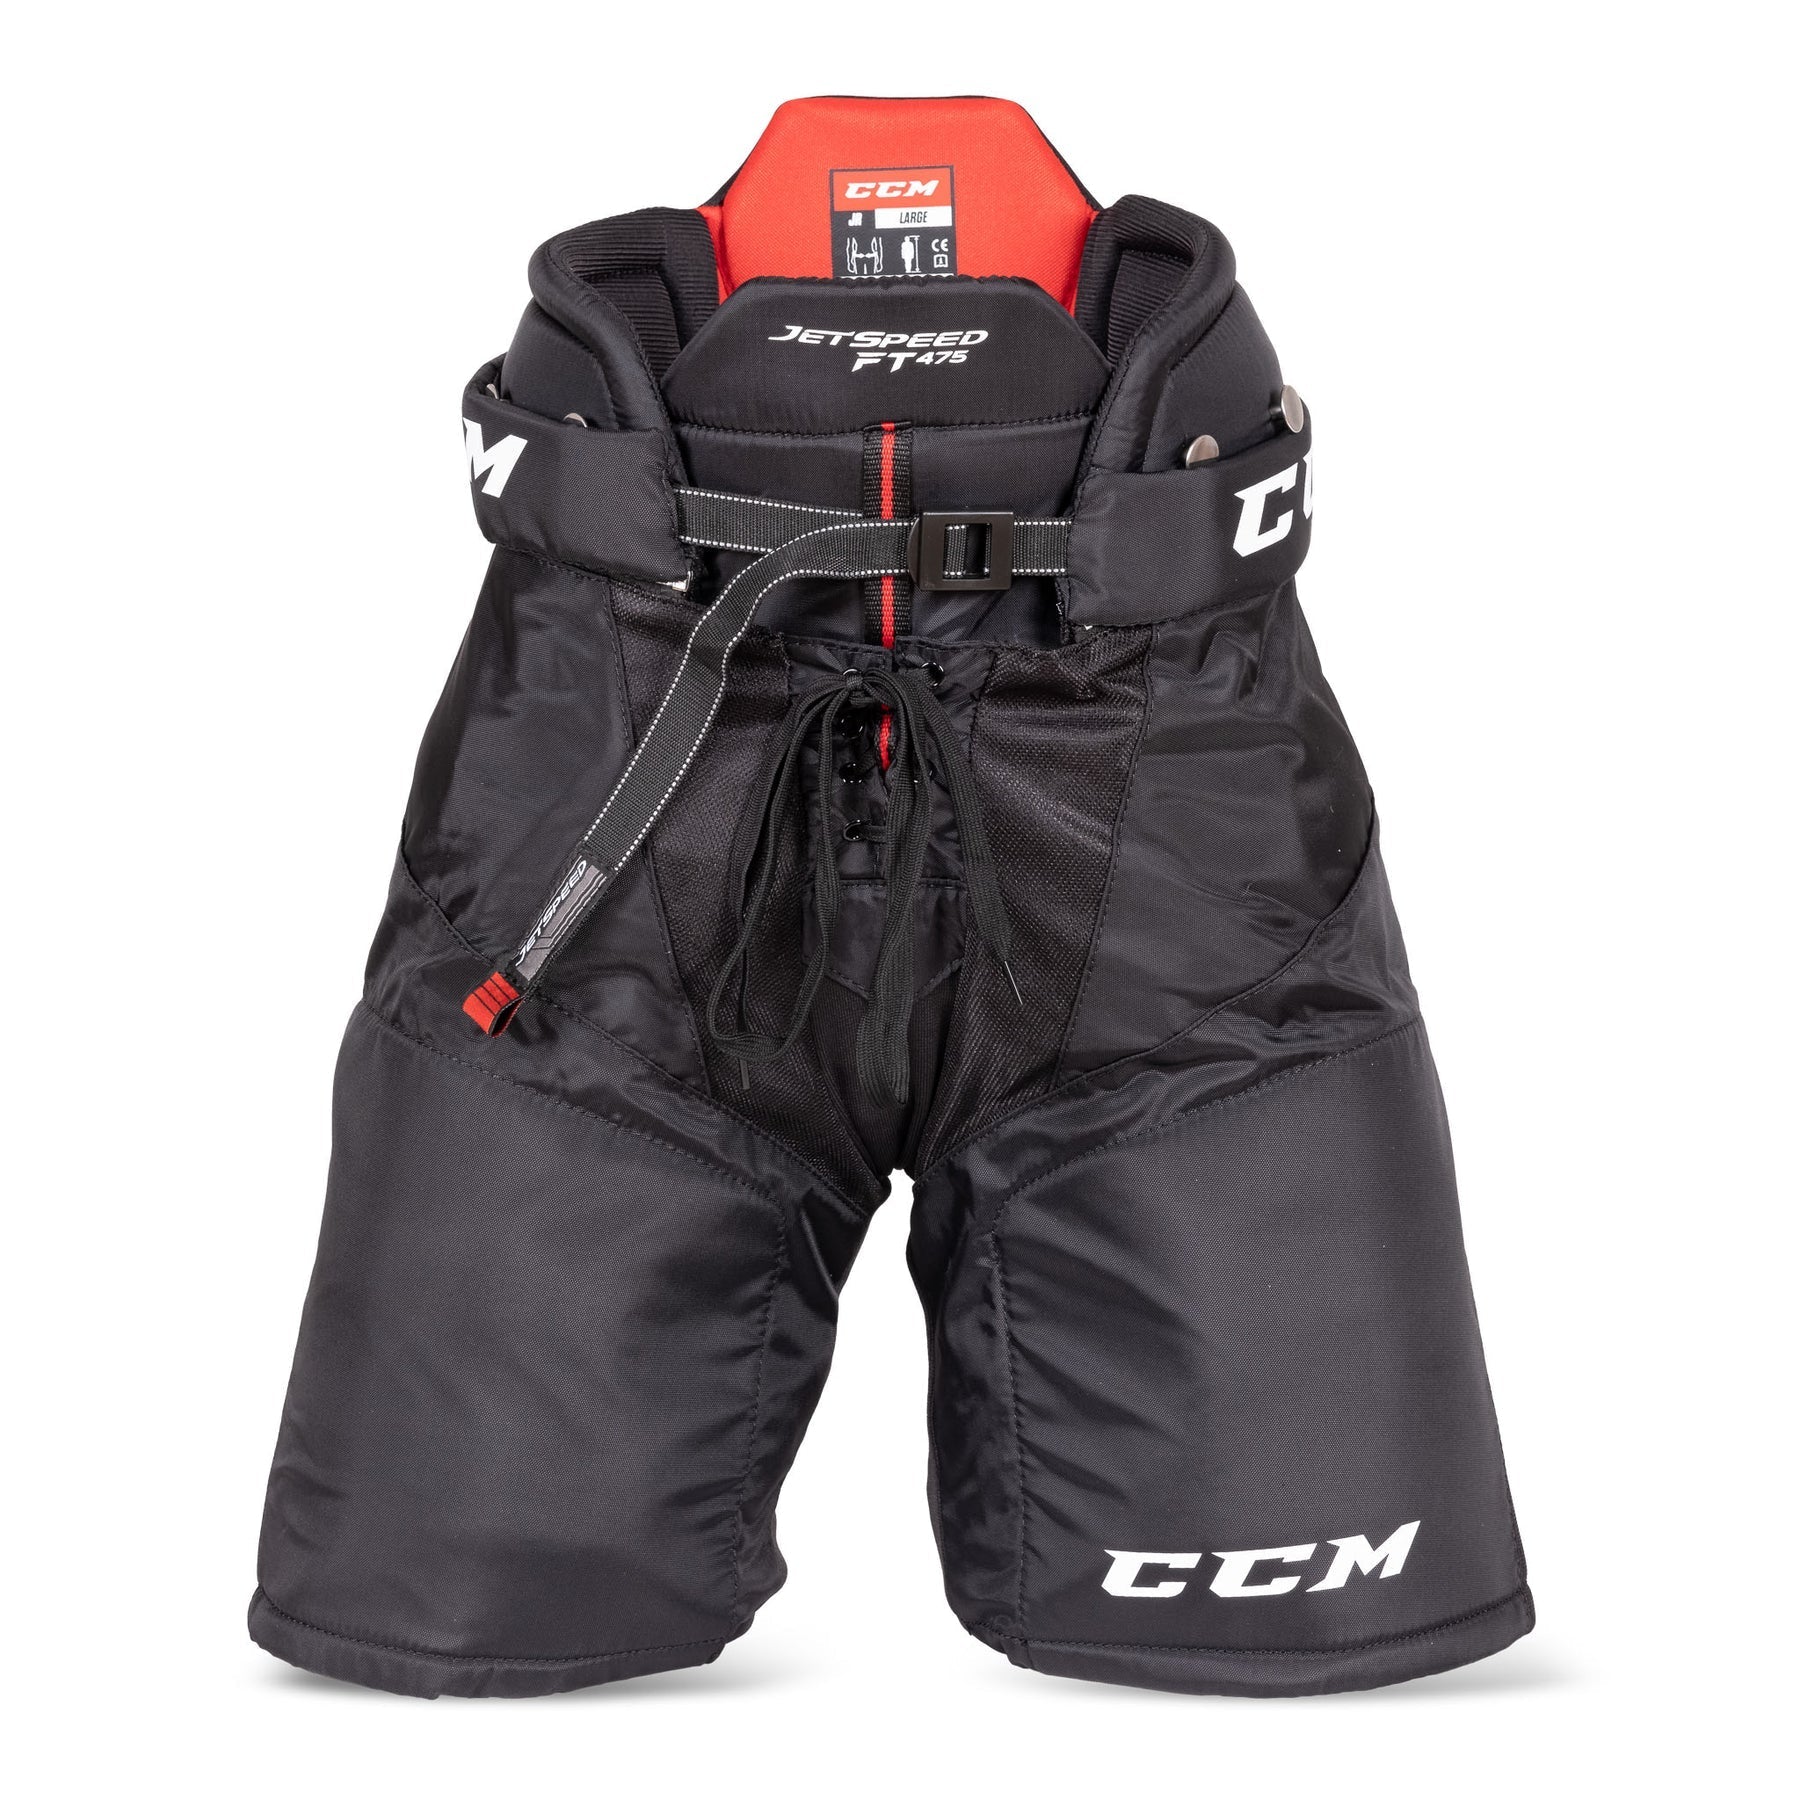 Ccm Jetspeed 475 Junior Hockey Pants-CCM-Sports Replay - Sports Excellence